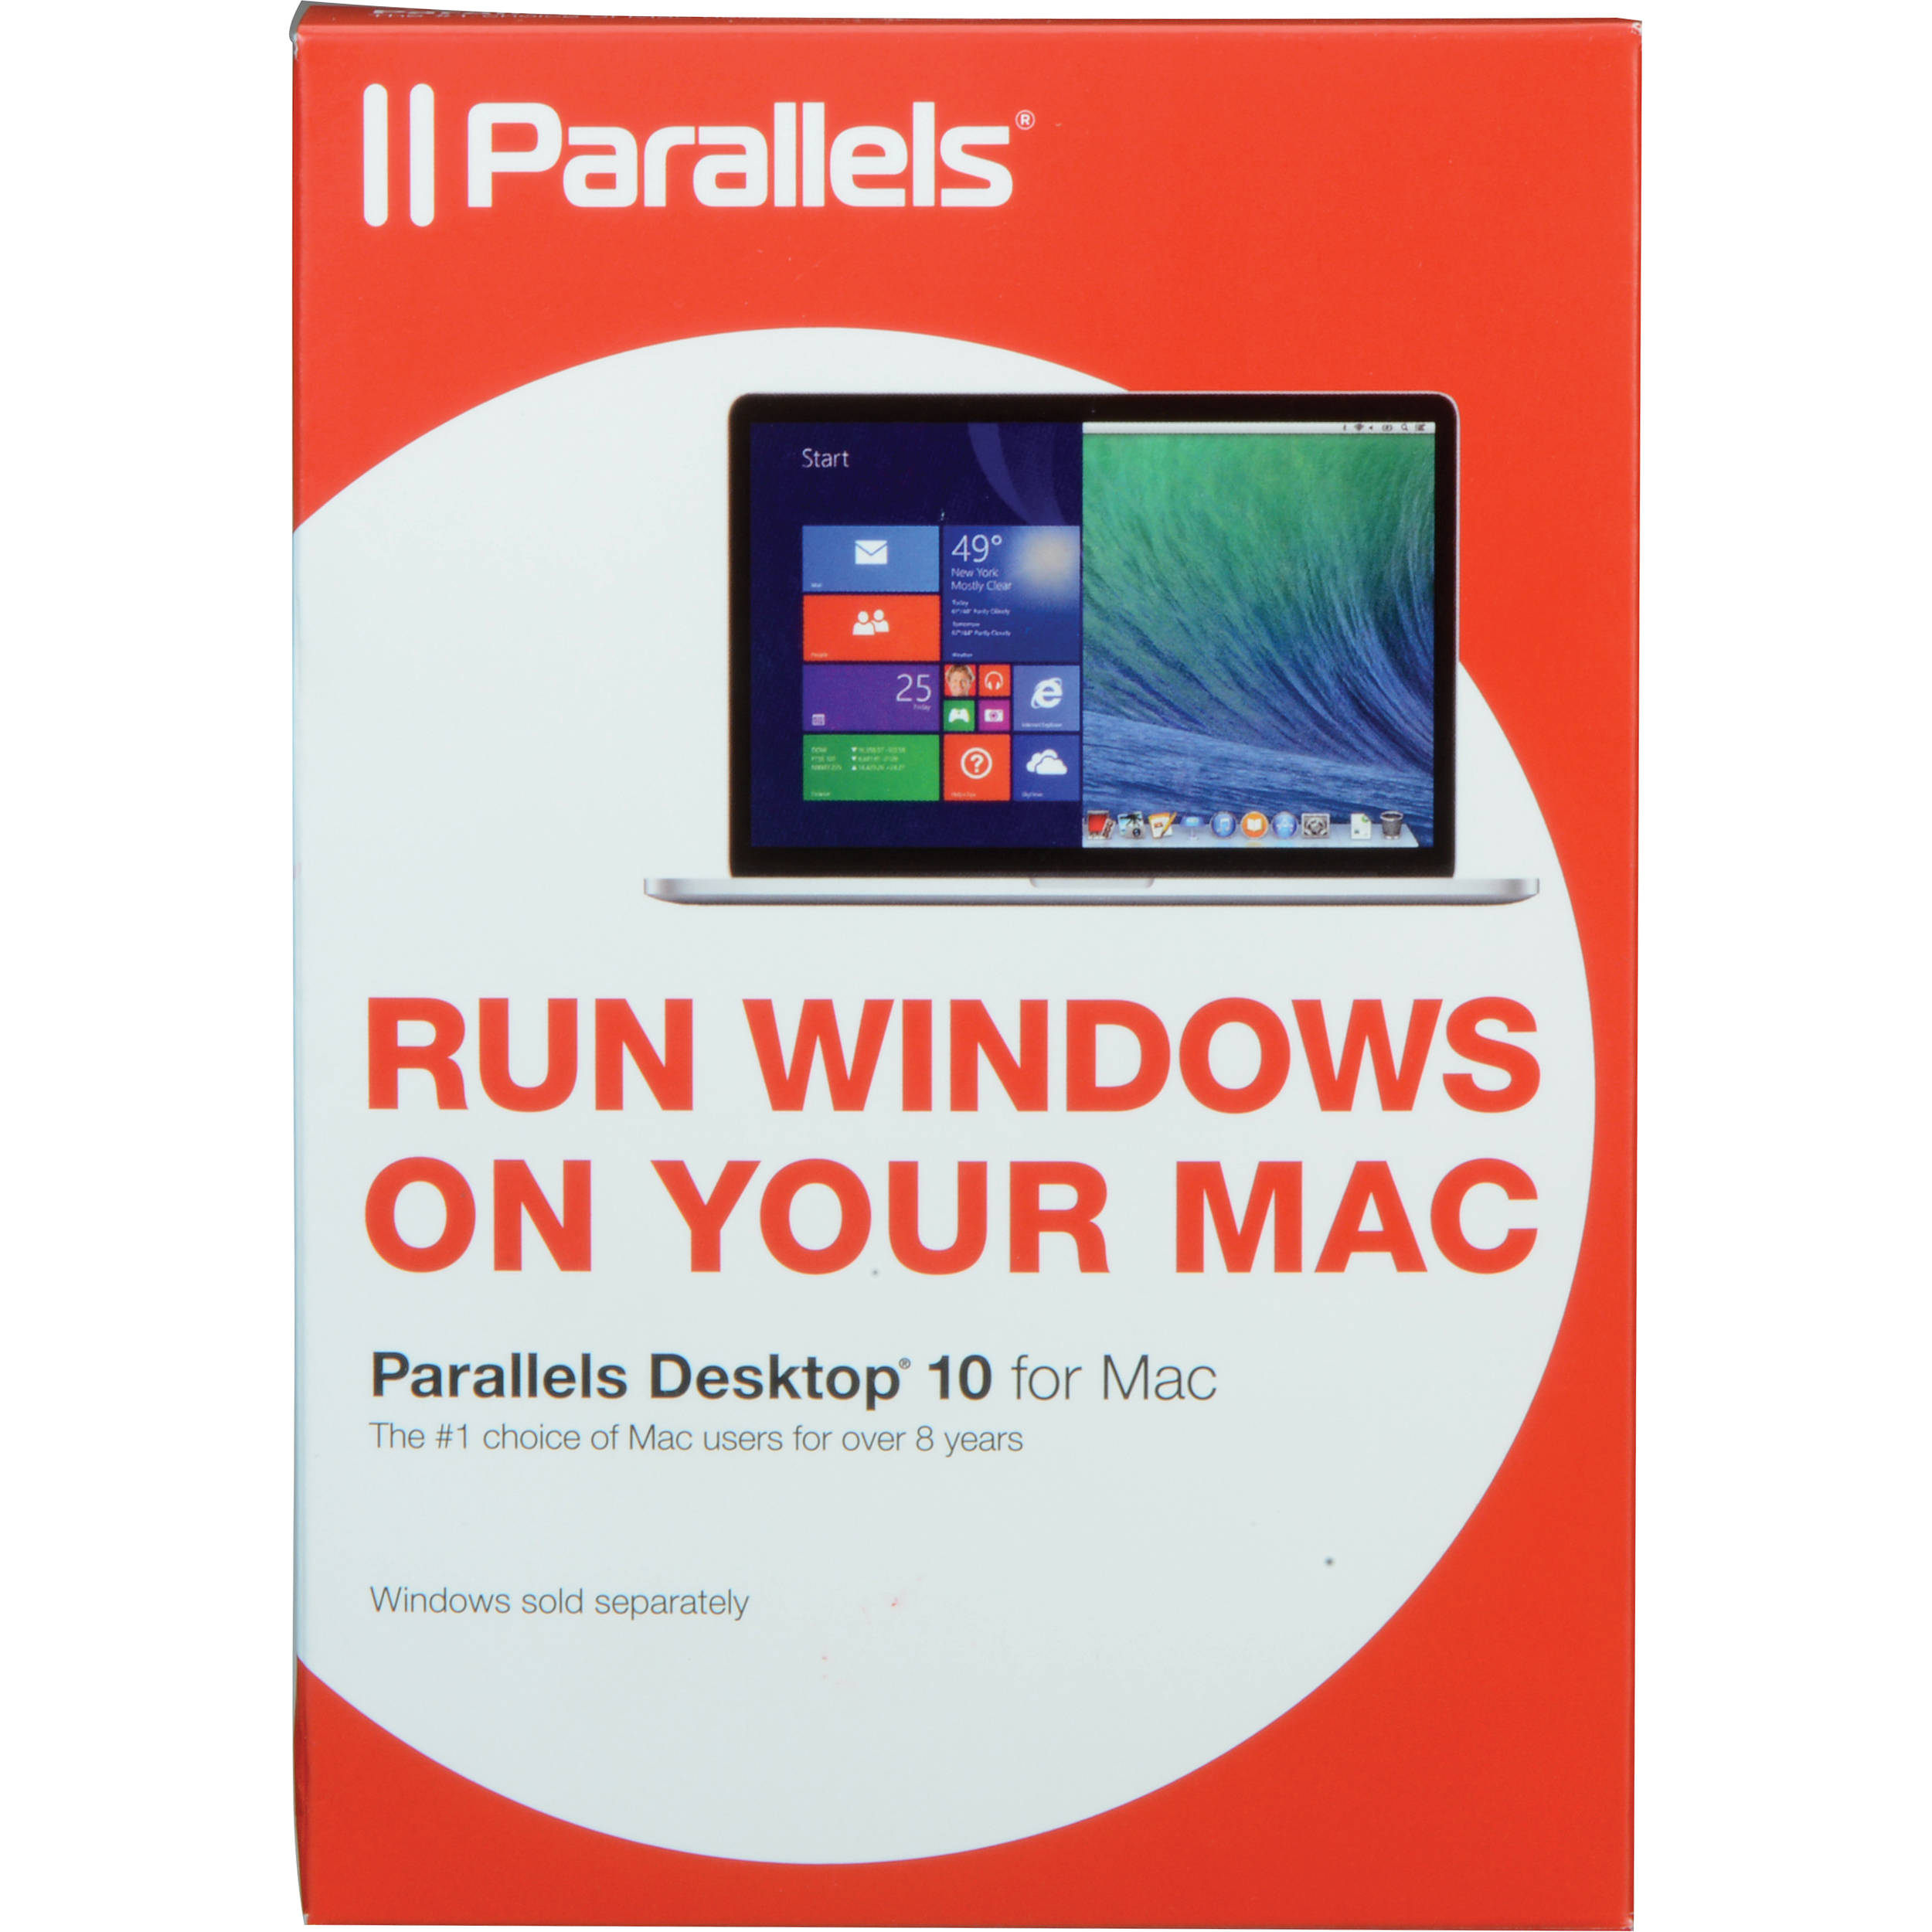 parallels desktop for mac download - box edition retail